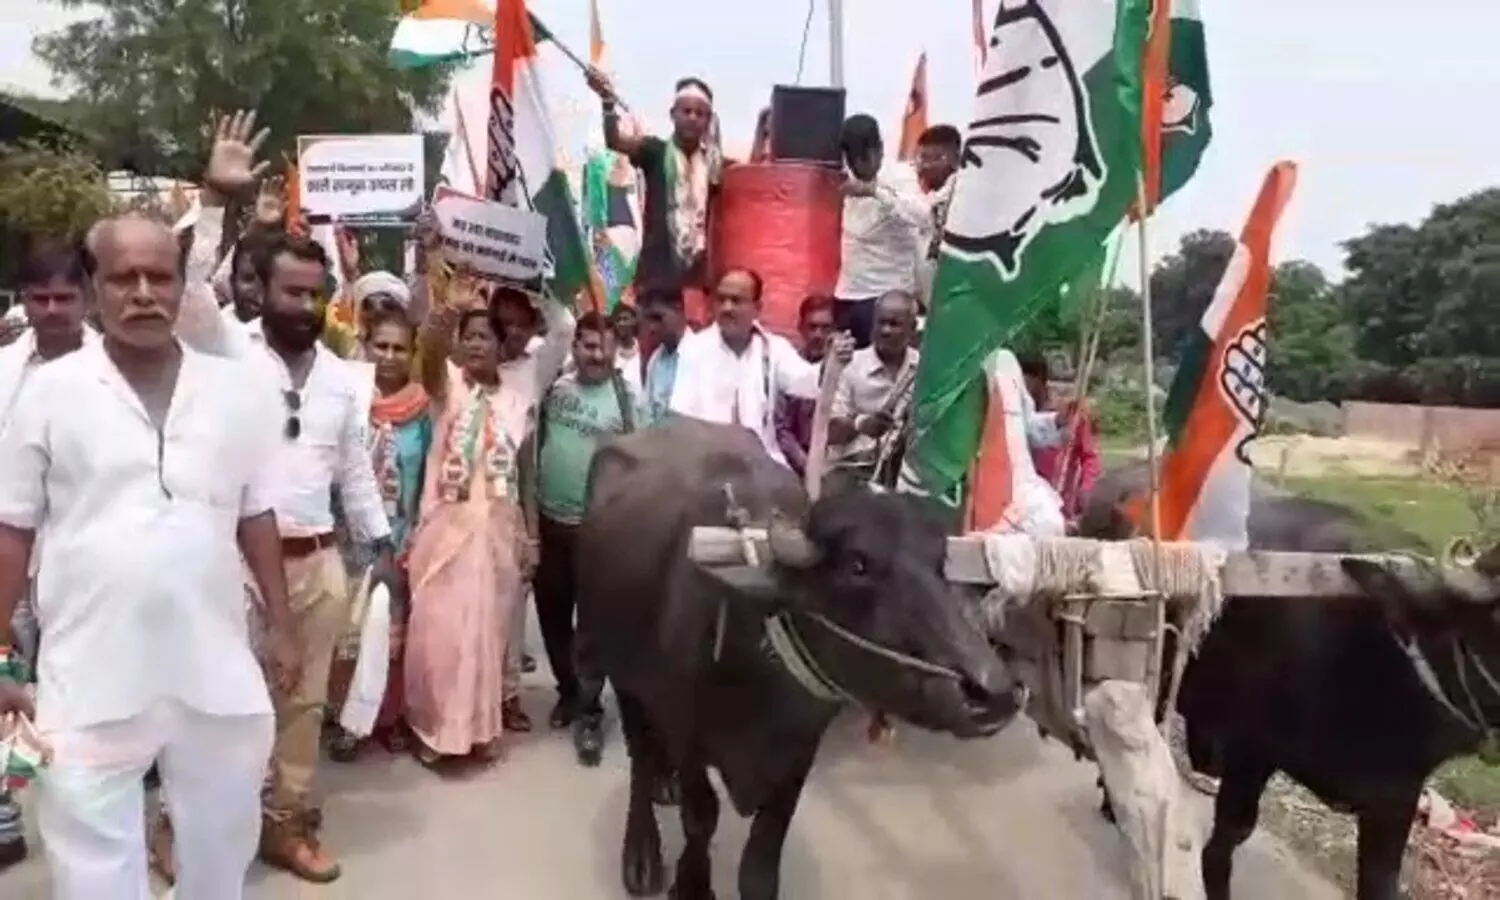 Congress leader protesting against BJP govt